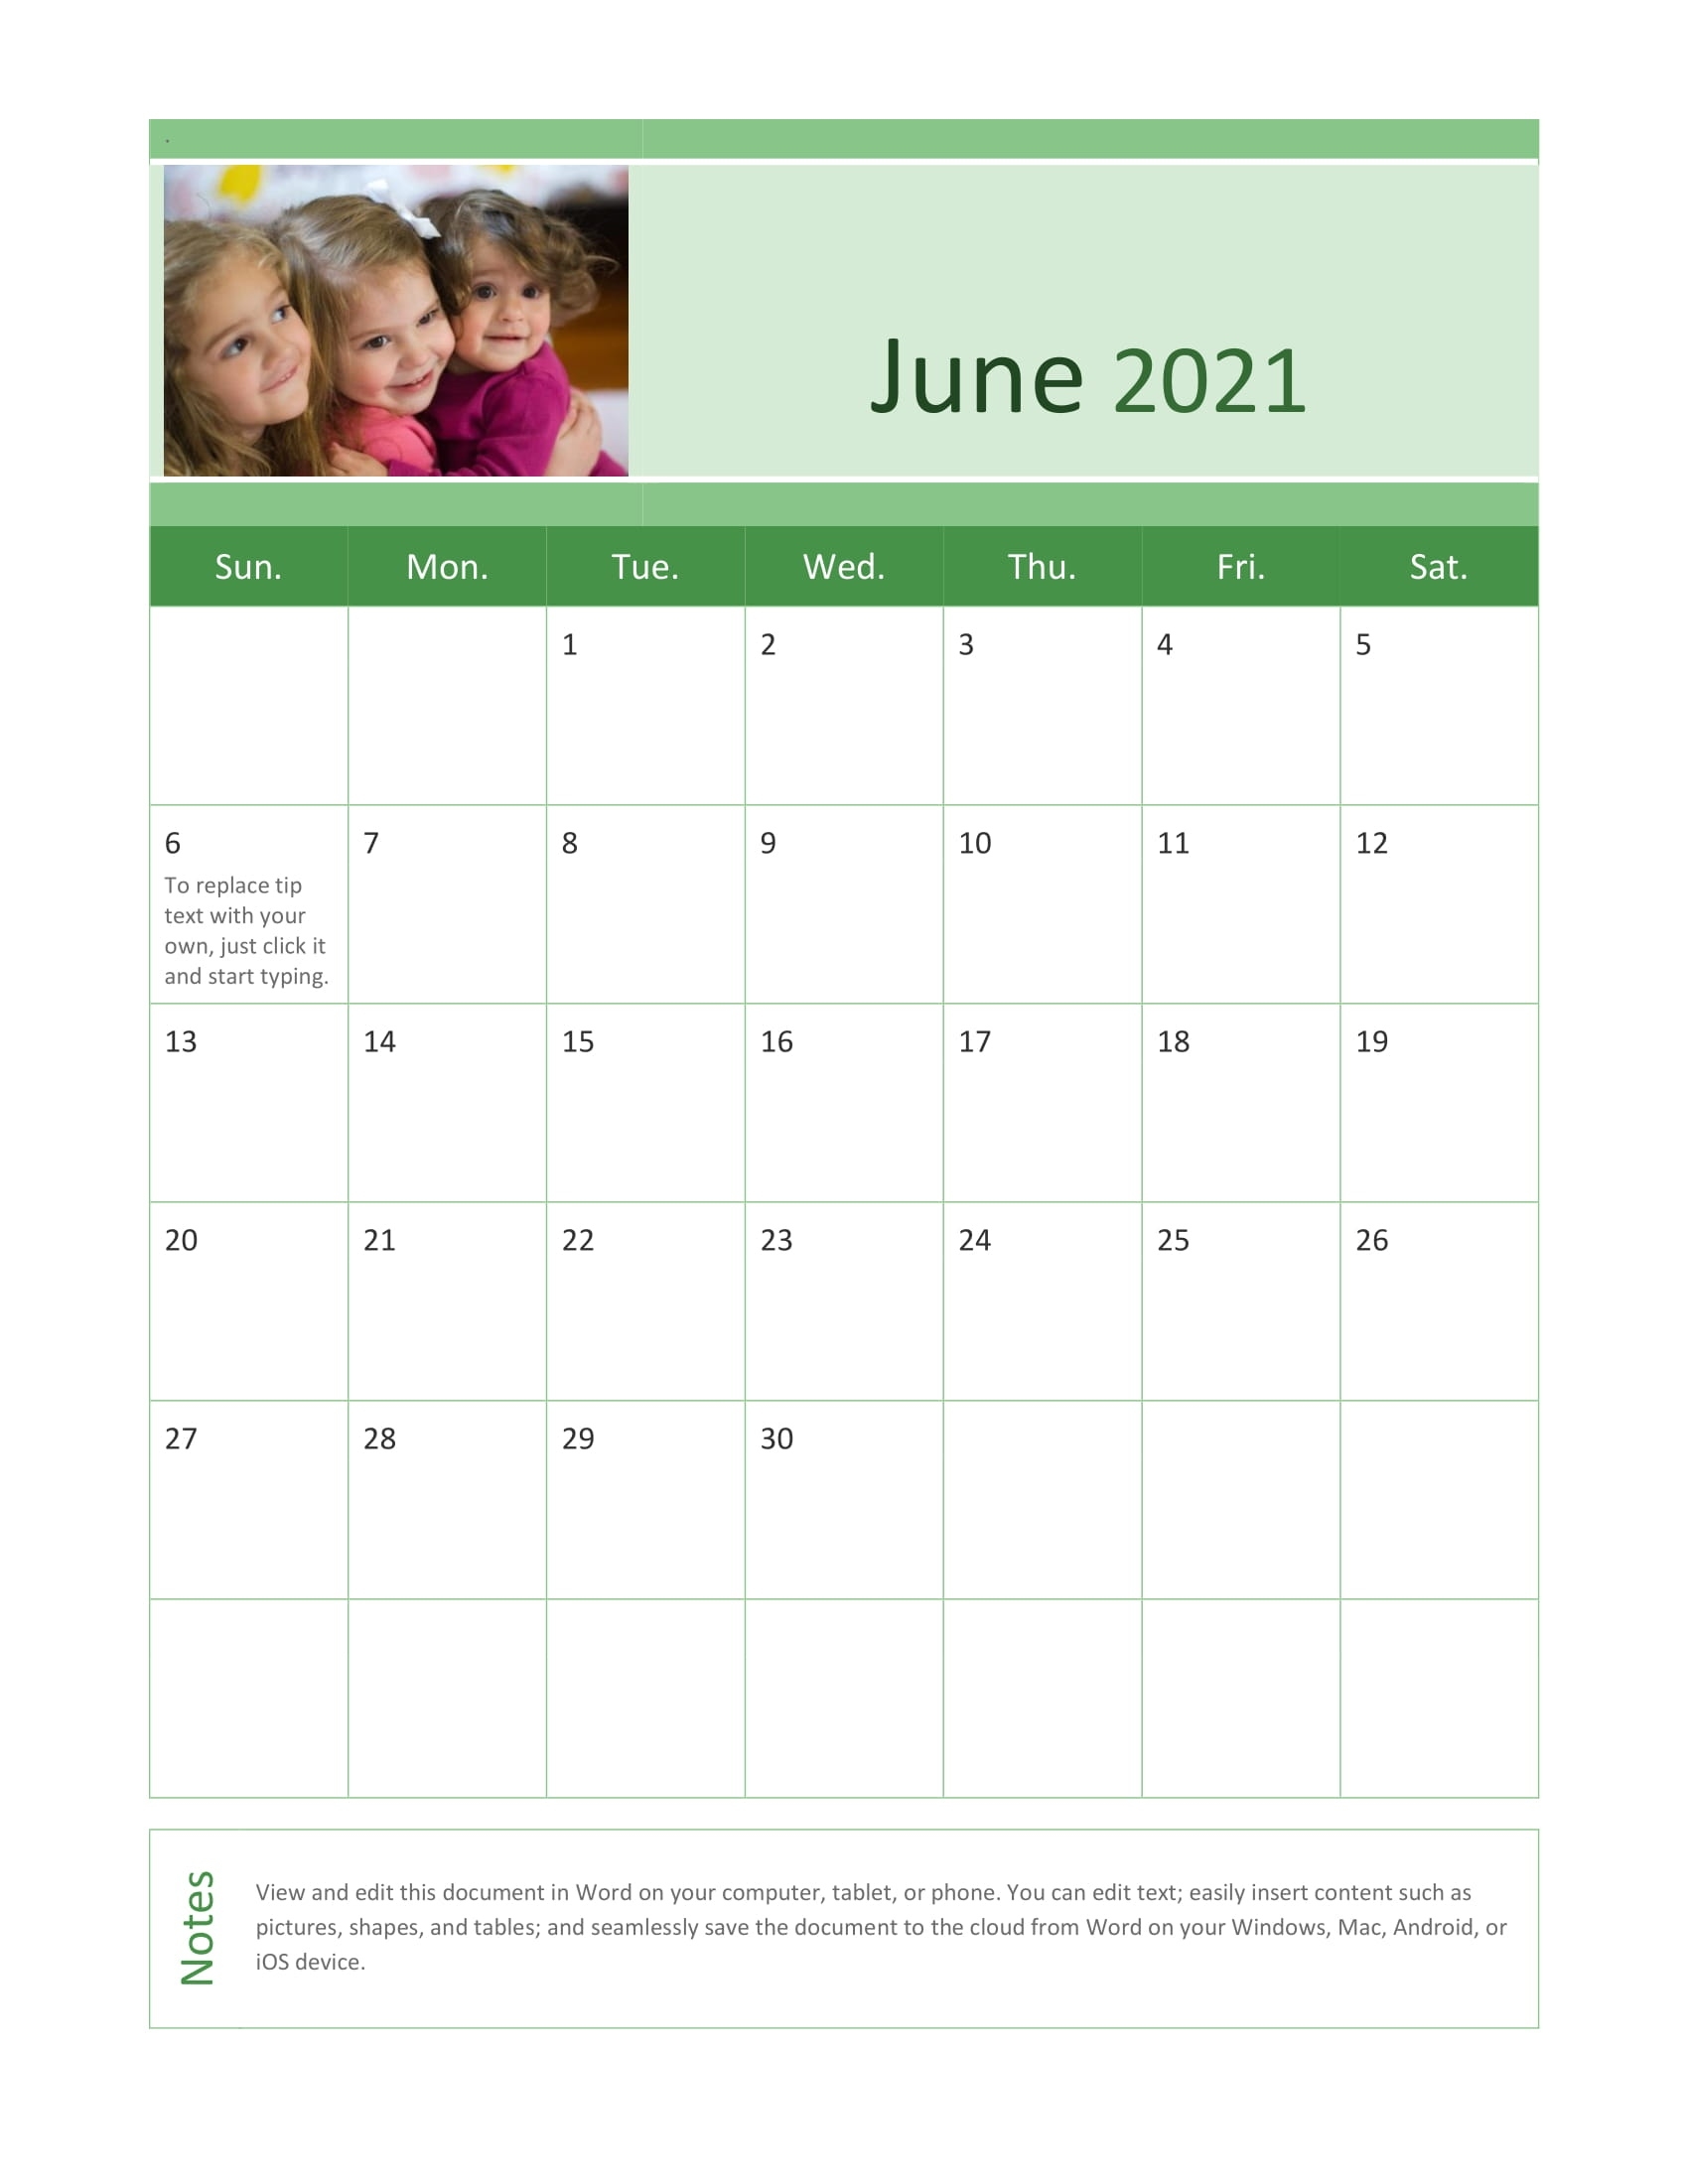 June 2021 Calendar Printable - Printable Calendar Template 2020 2021 Daily Calendar 2021 June